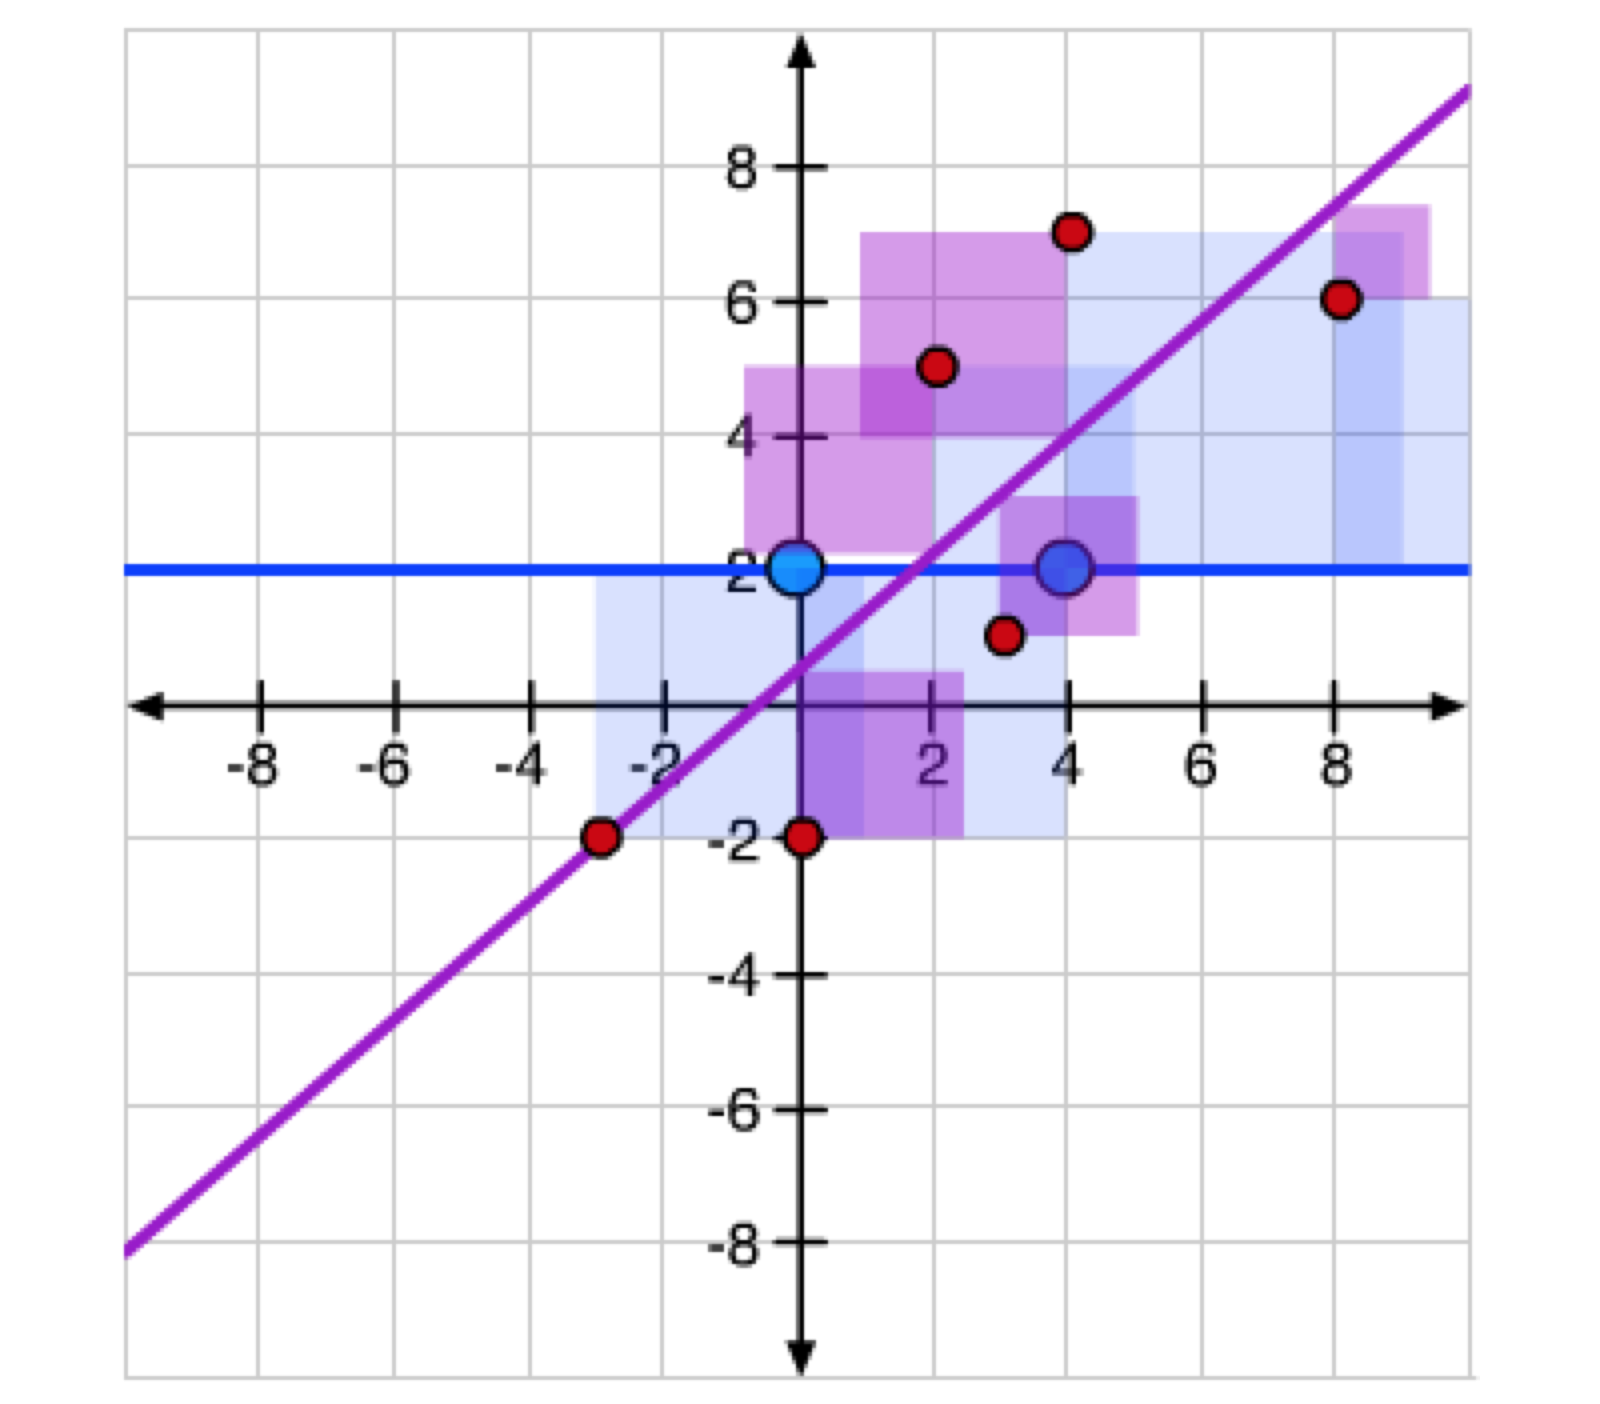 interacive visualiztion of least squares regression